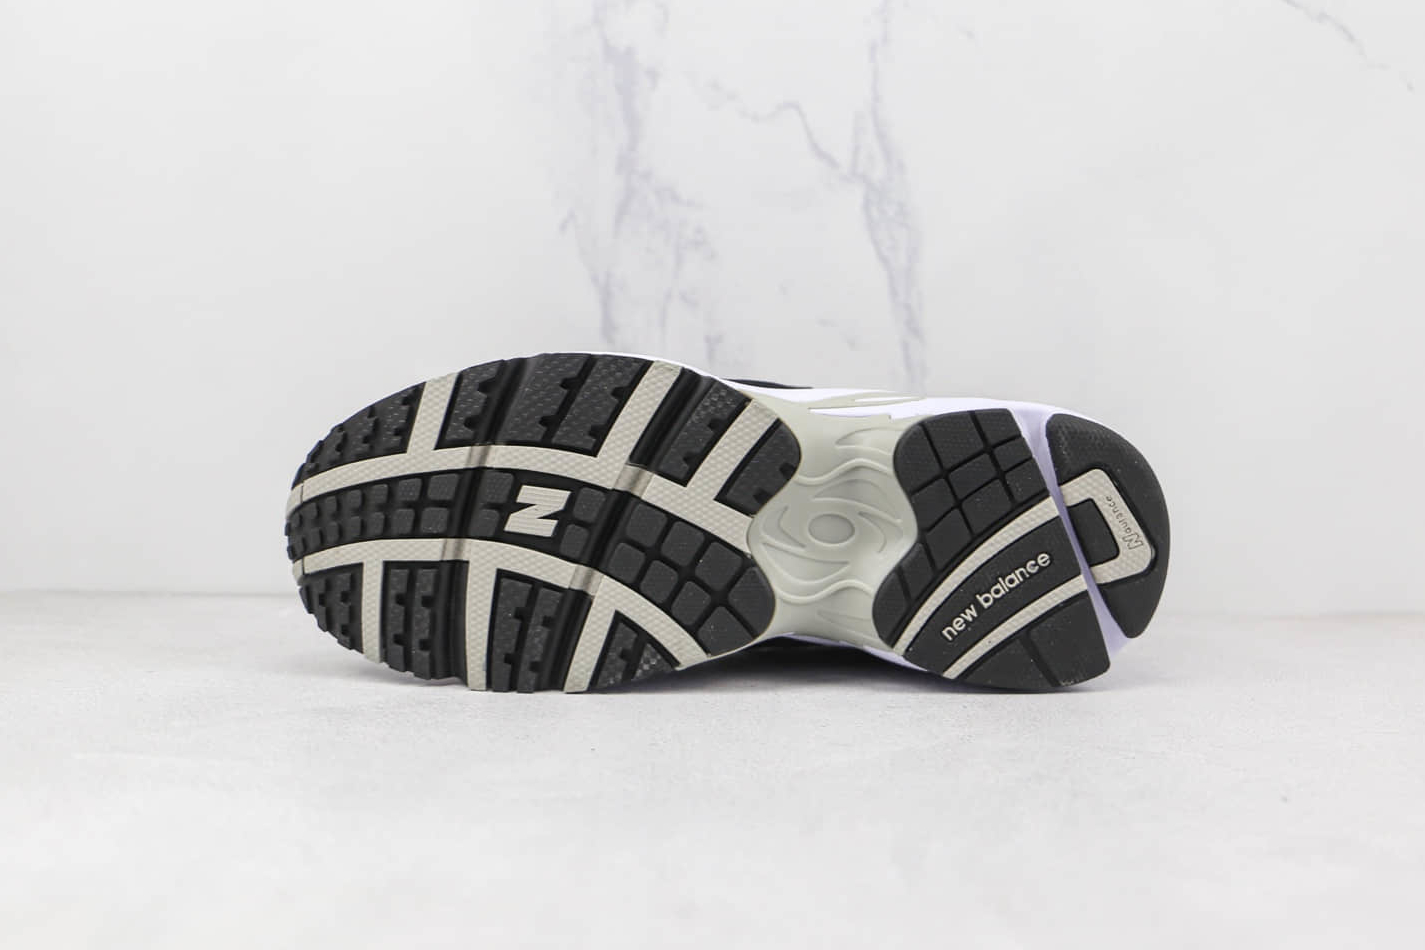 New Balance 725 'Black Metallic Silver' ML725R - Premium Athletic Sneakers